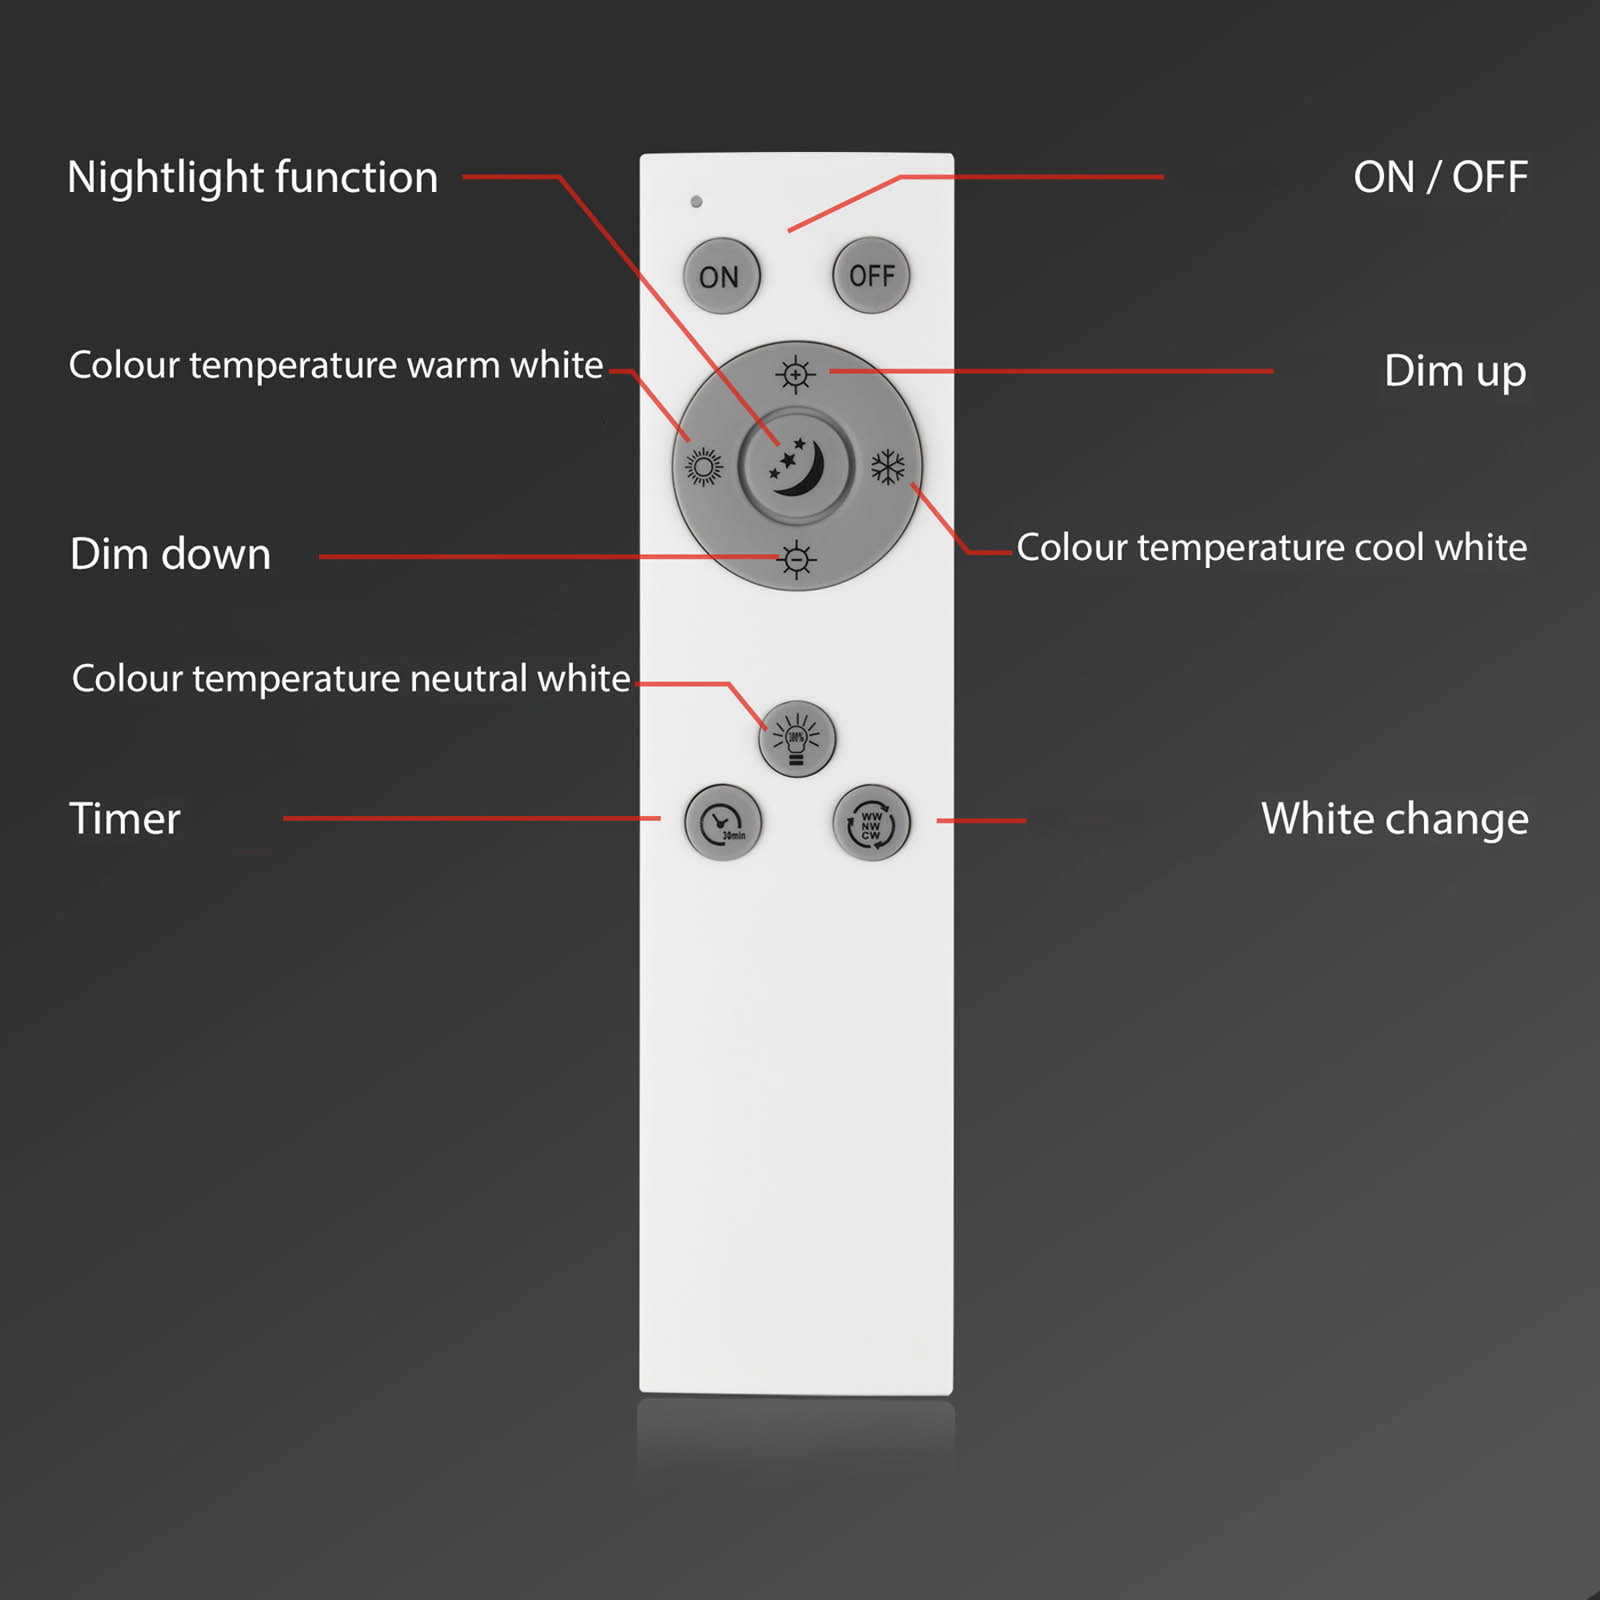 LED-Deckenlampe Ivy S, dimmbar, CCT, Ø 33 cm